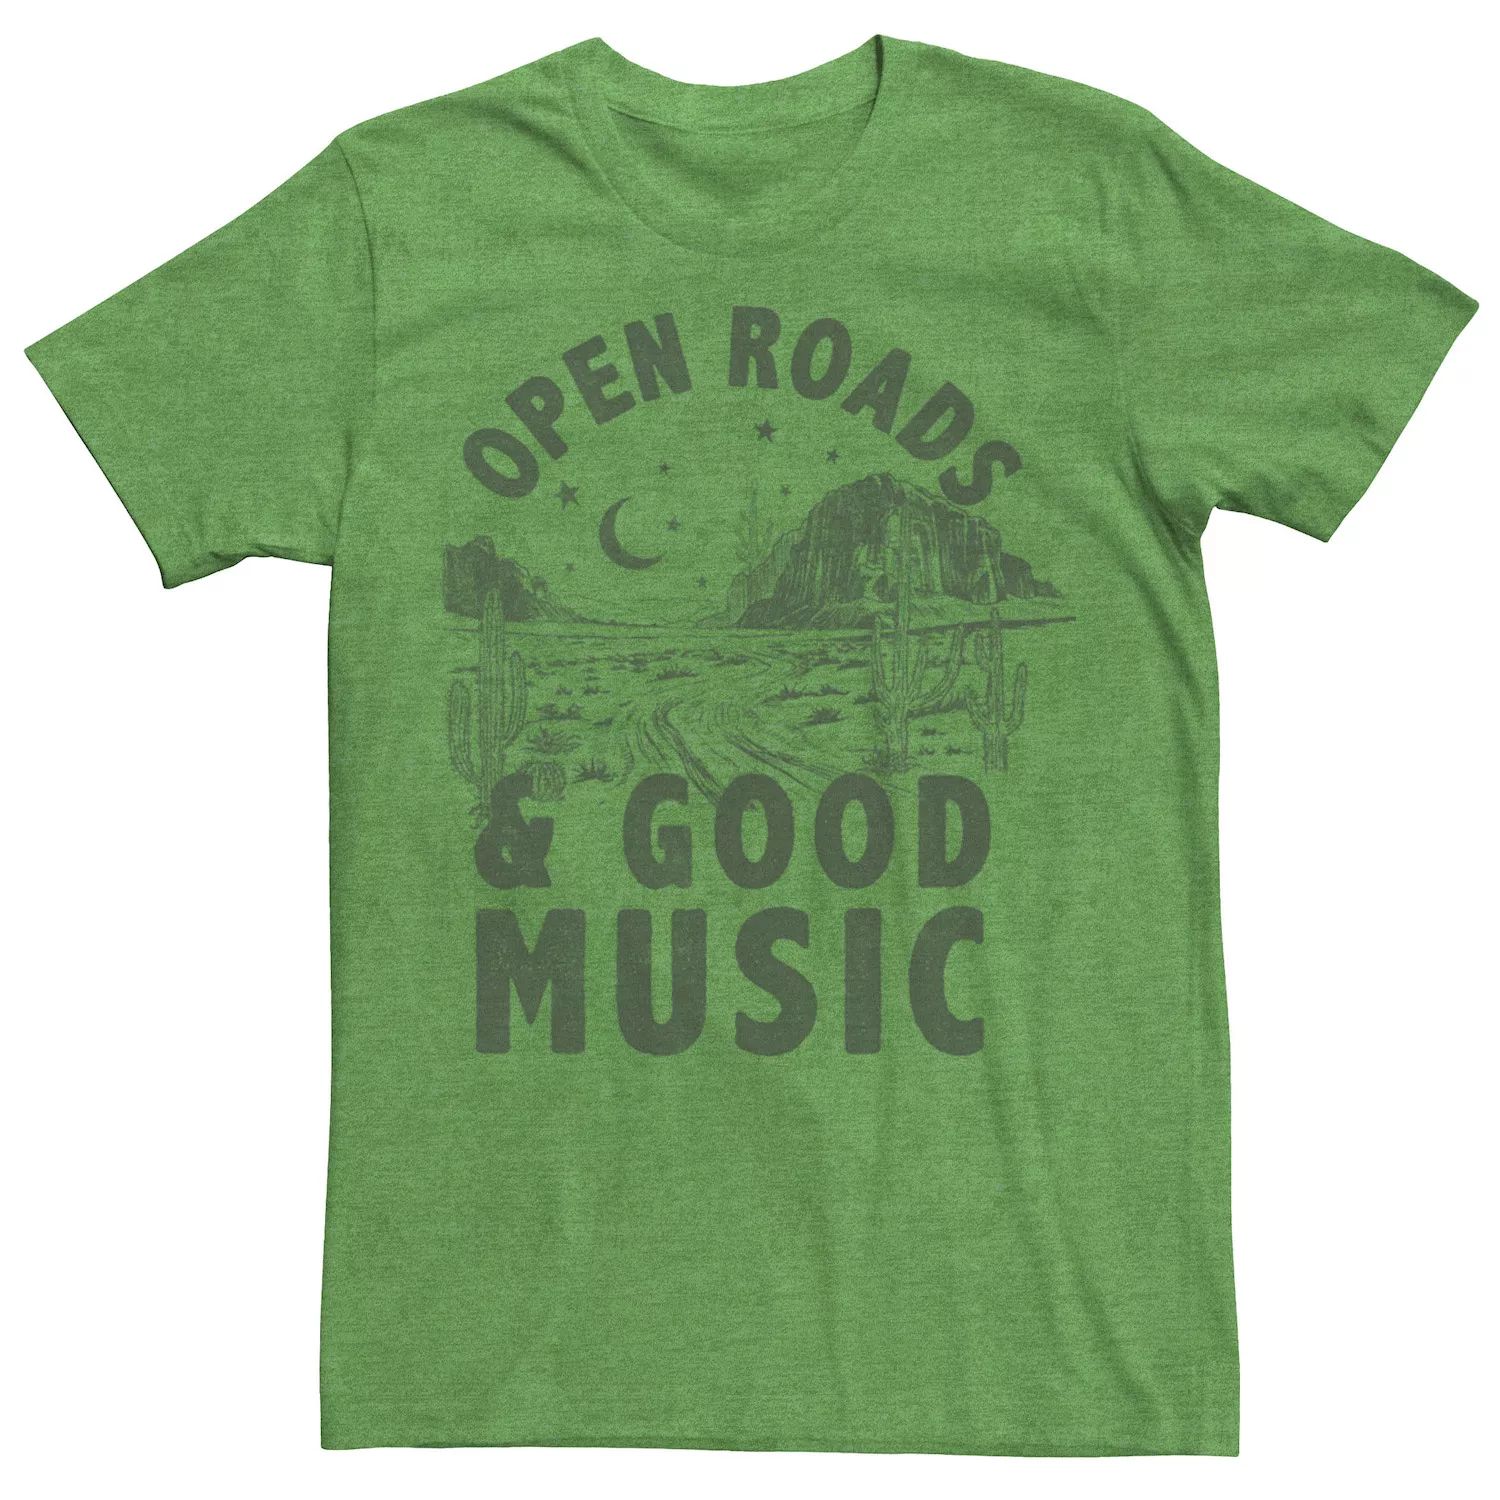 Мужская футболка с рисунком Open Roads Good Music Desert Licensed Character